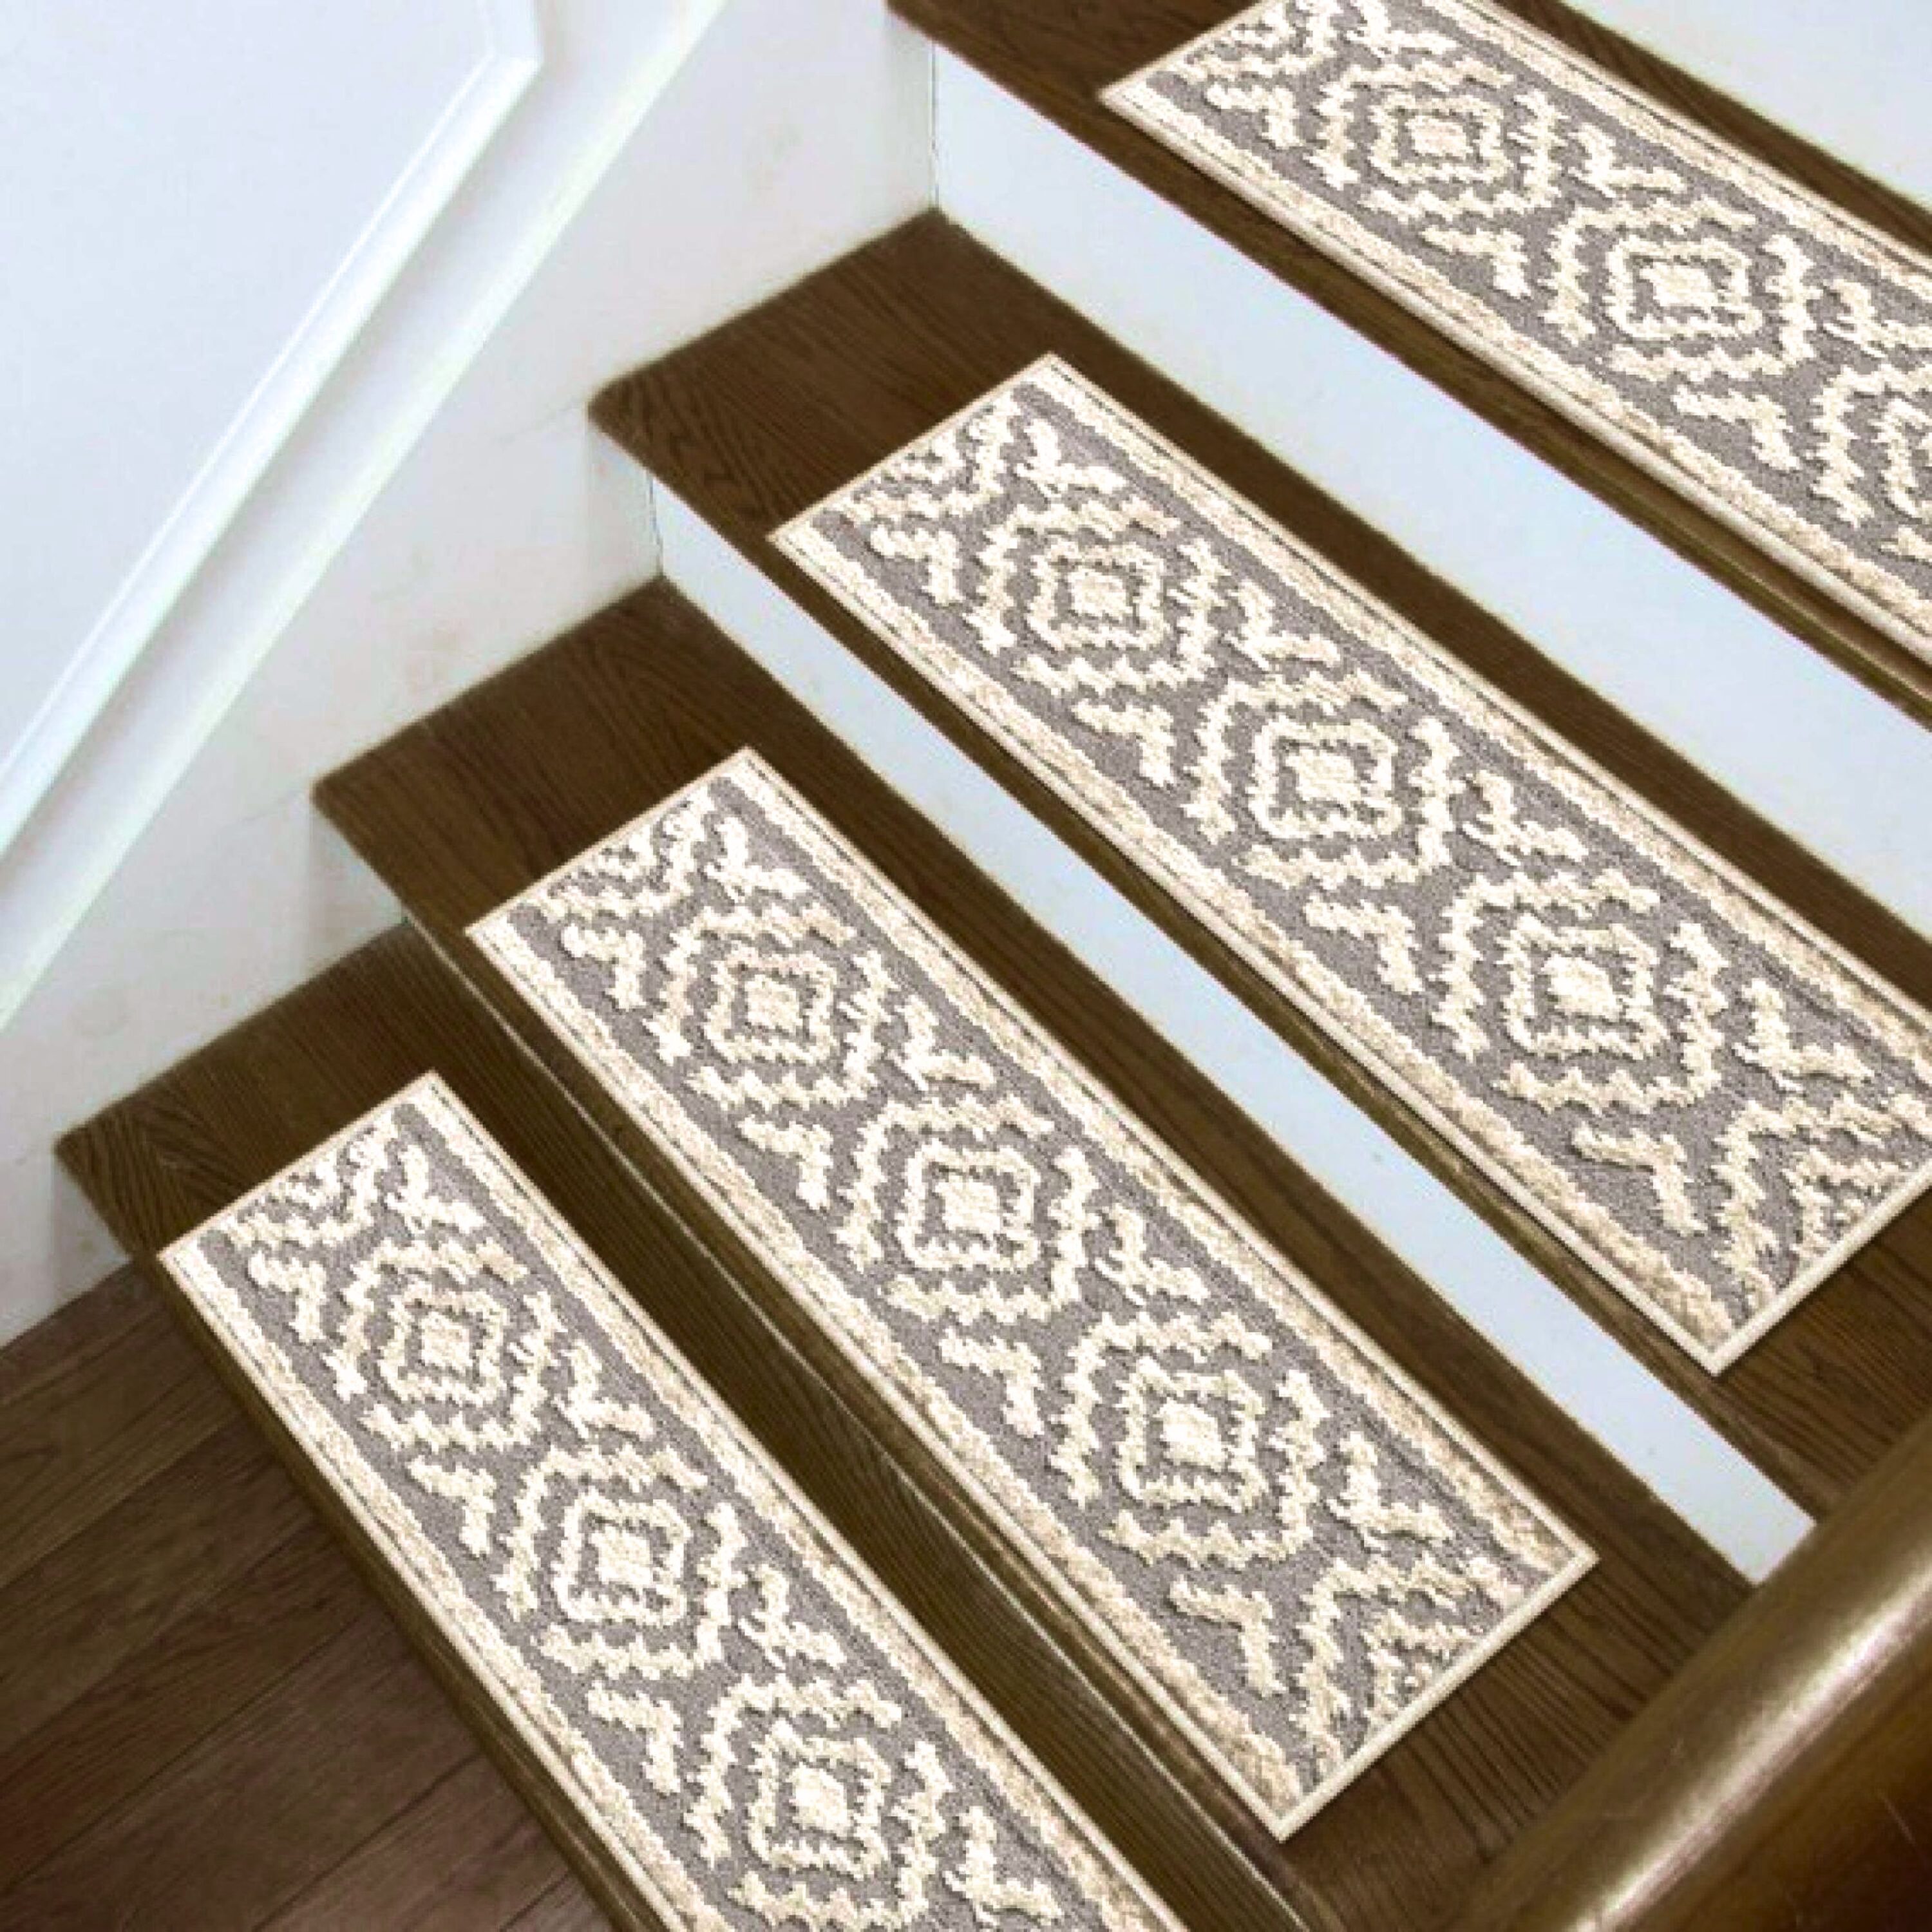 Moroccan Design Stair Rug, White Stair Treads Carpet, Non-slip